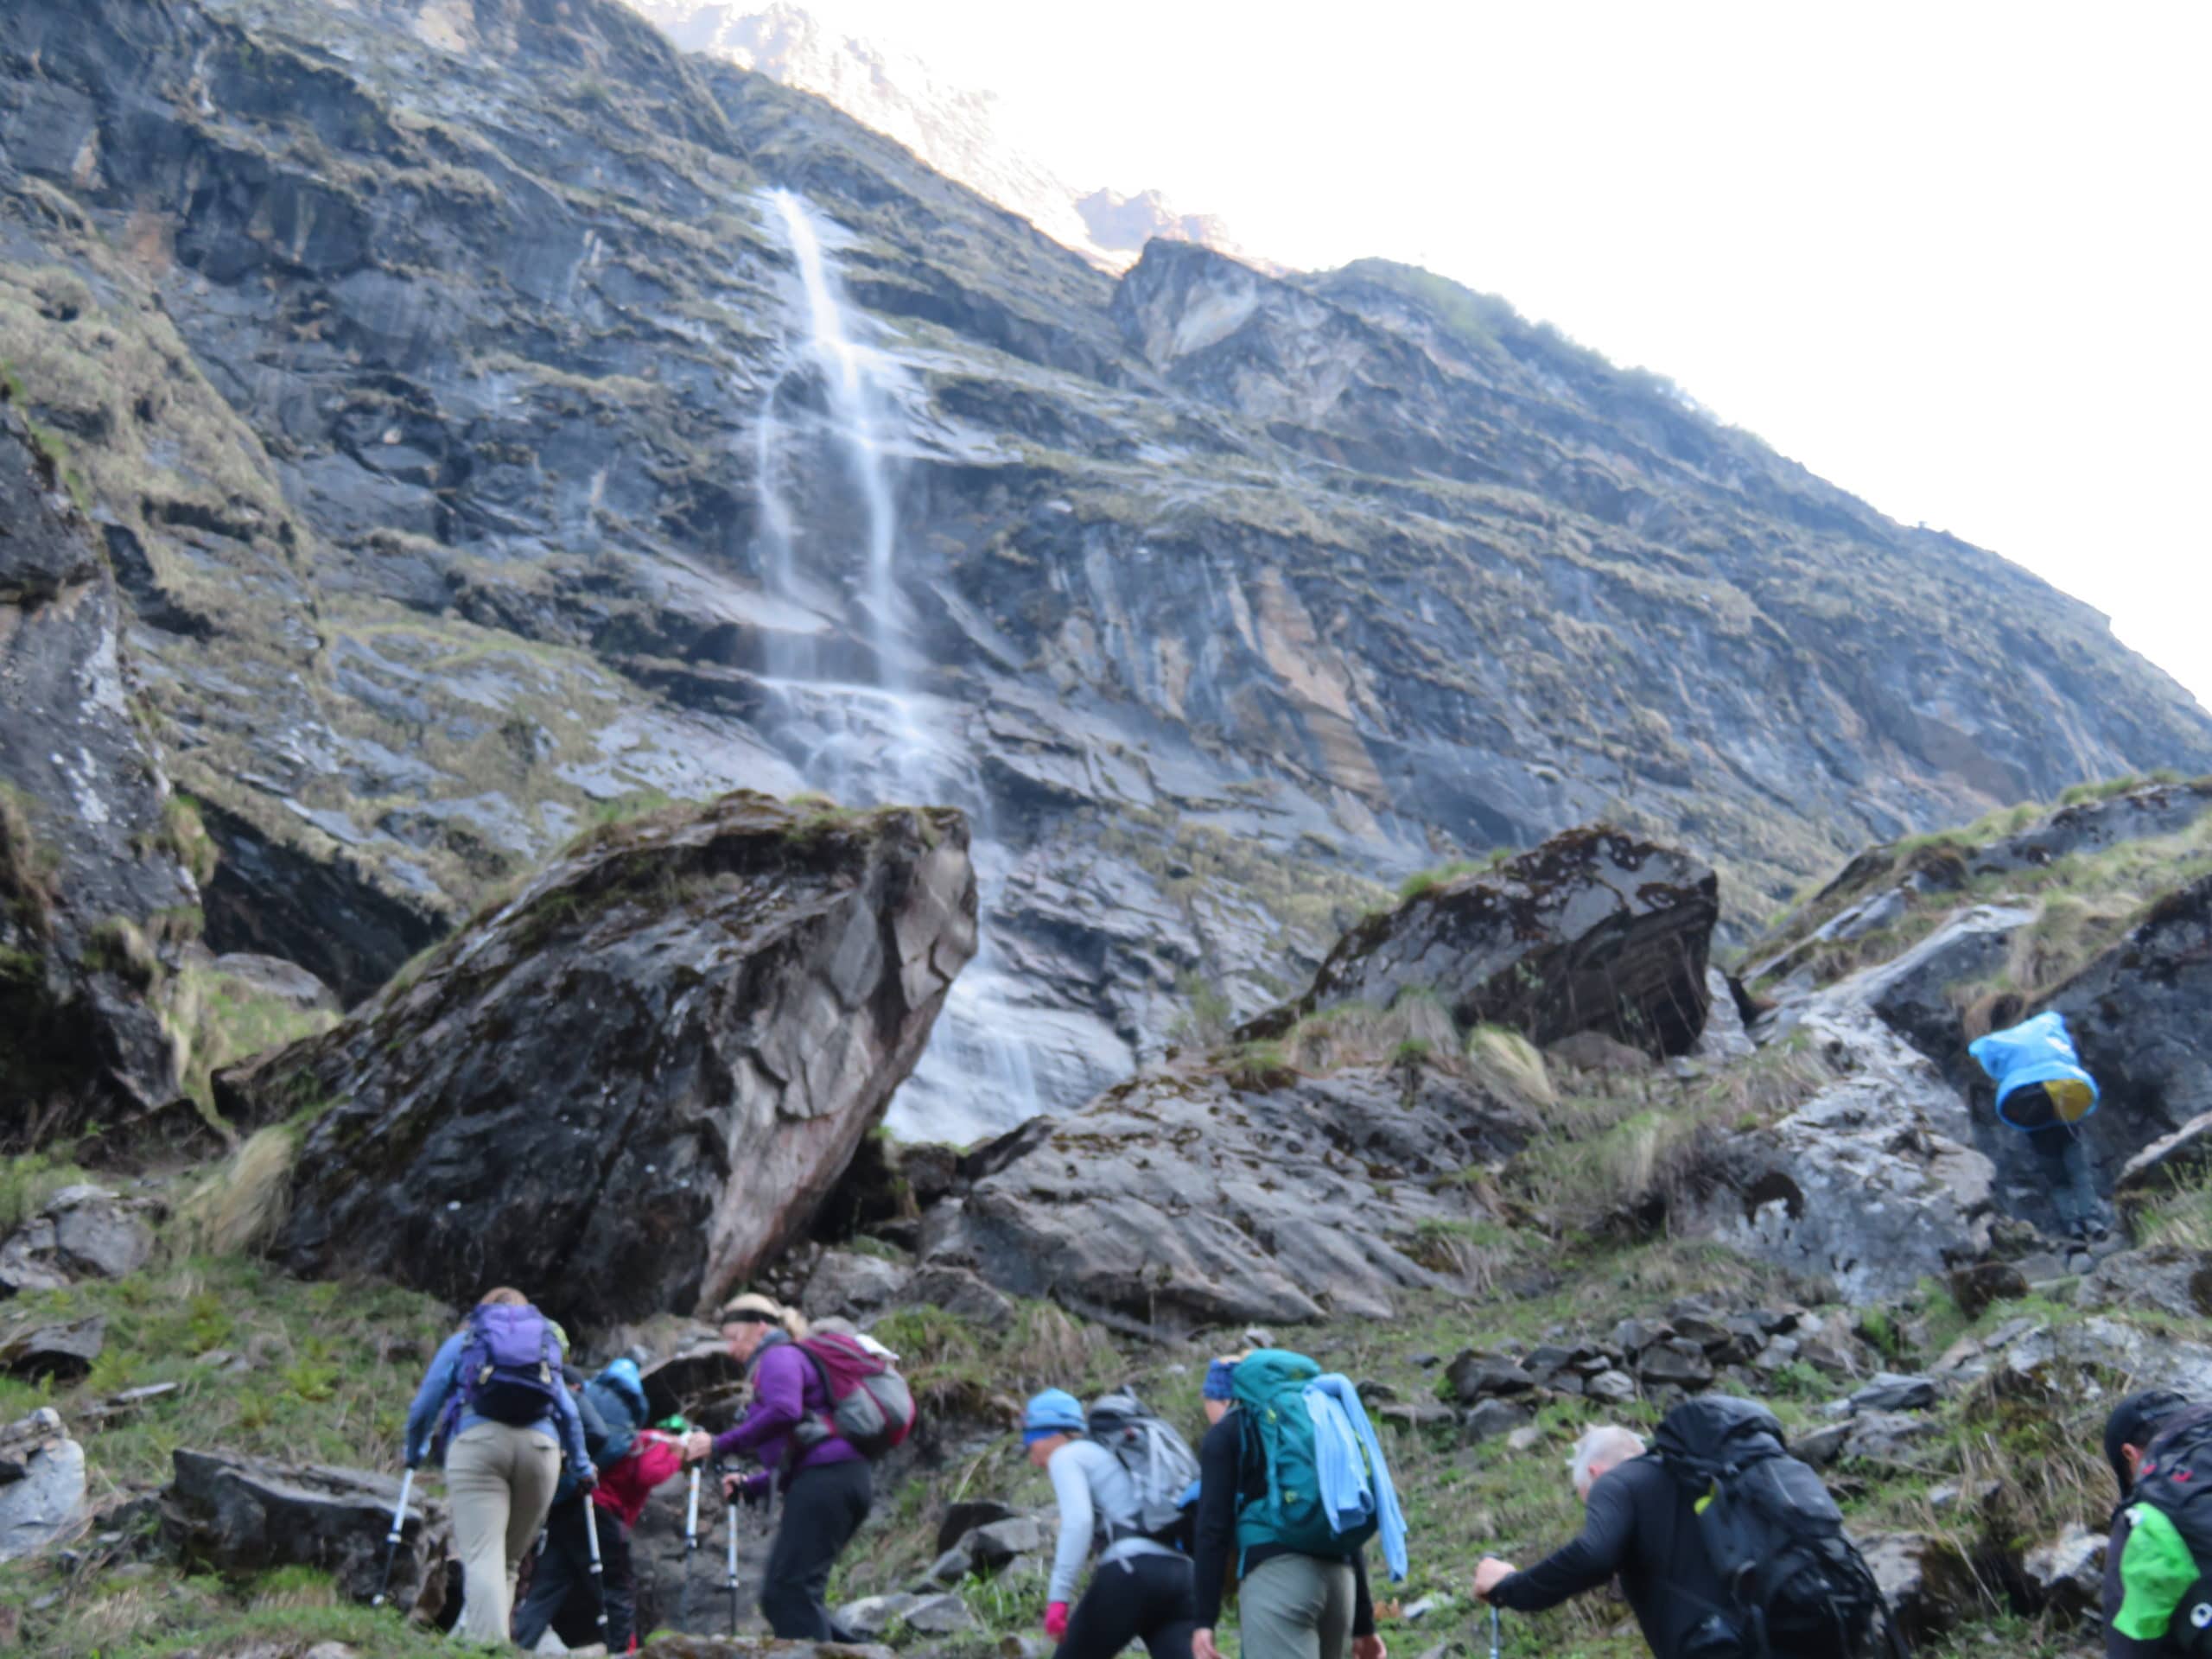 Hiking to Annapurna Base Camp